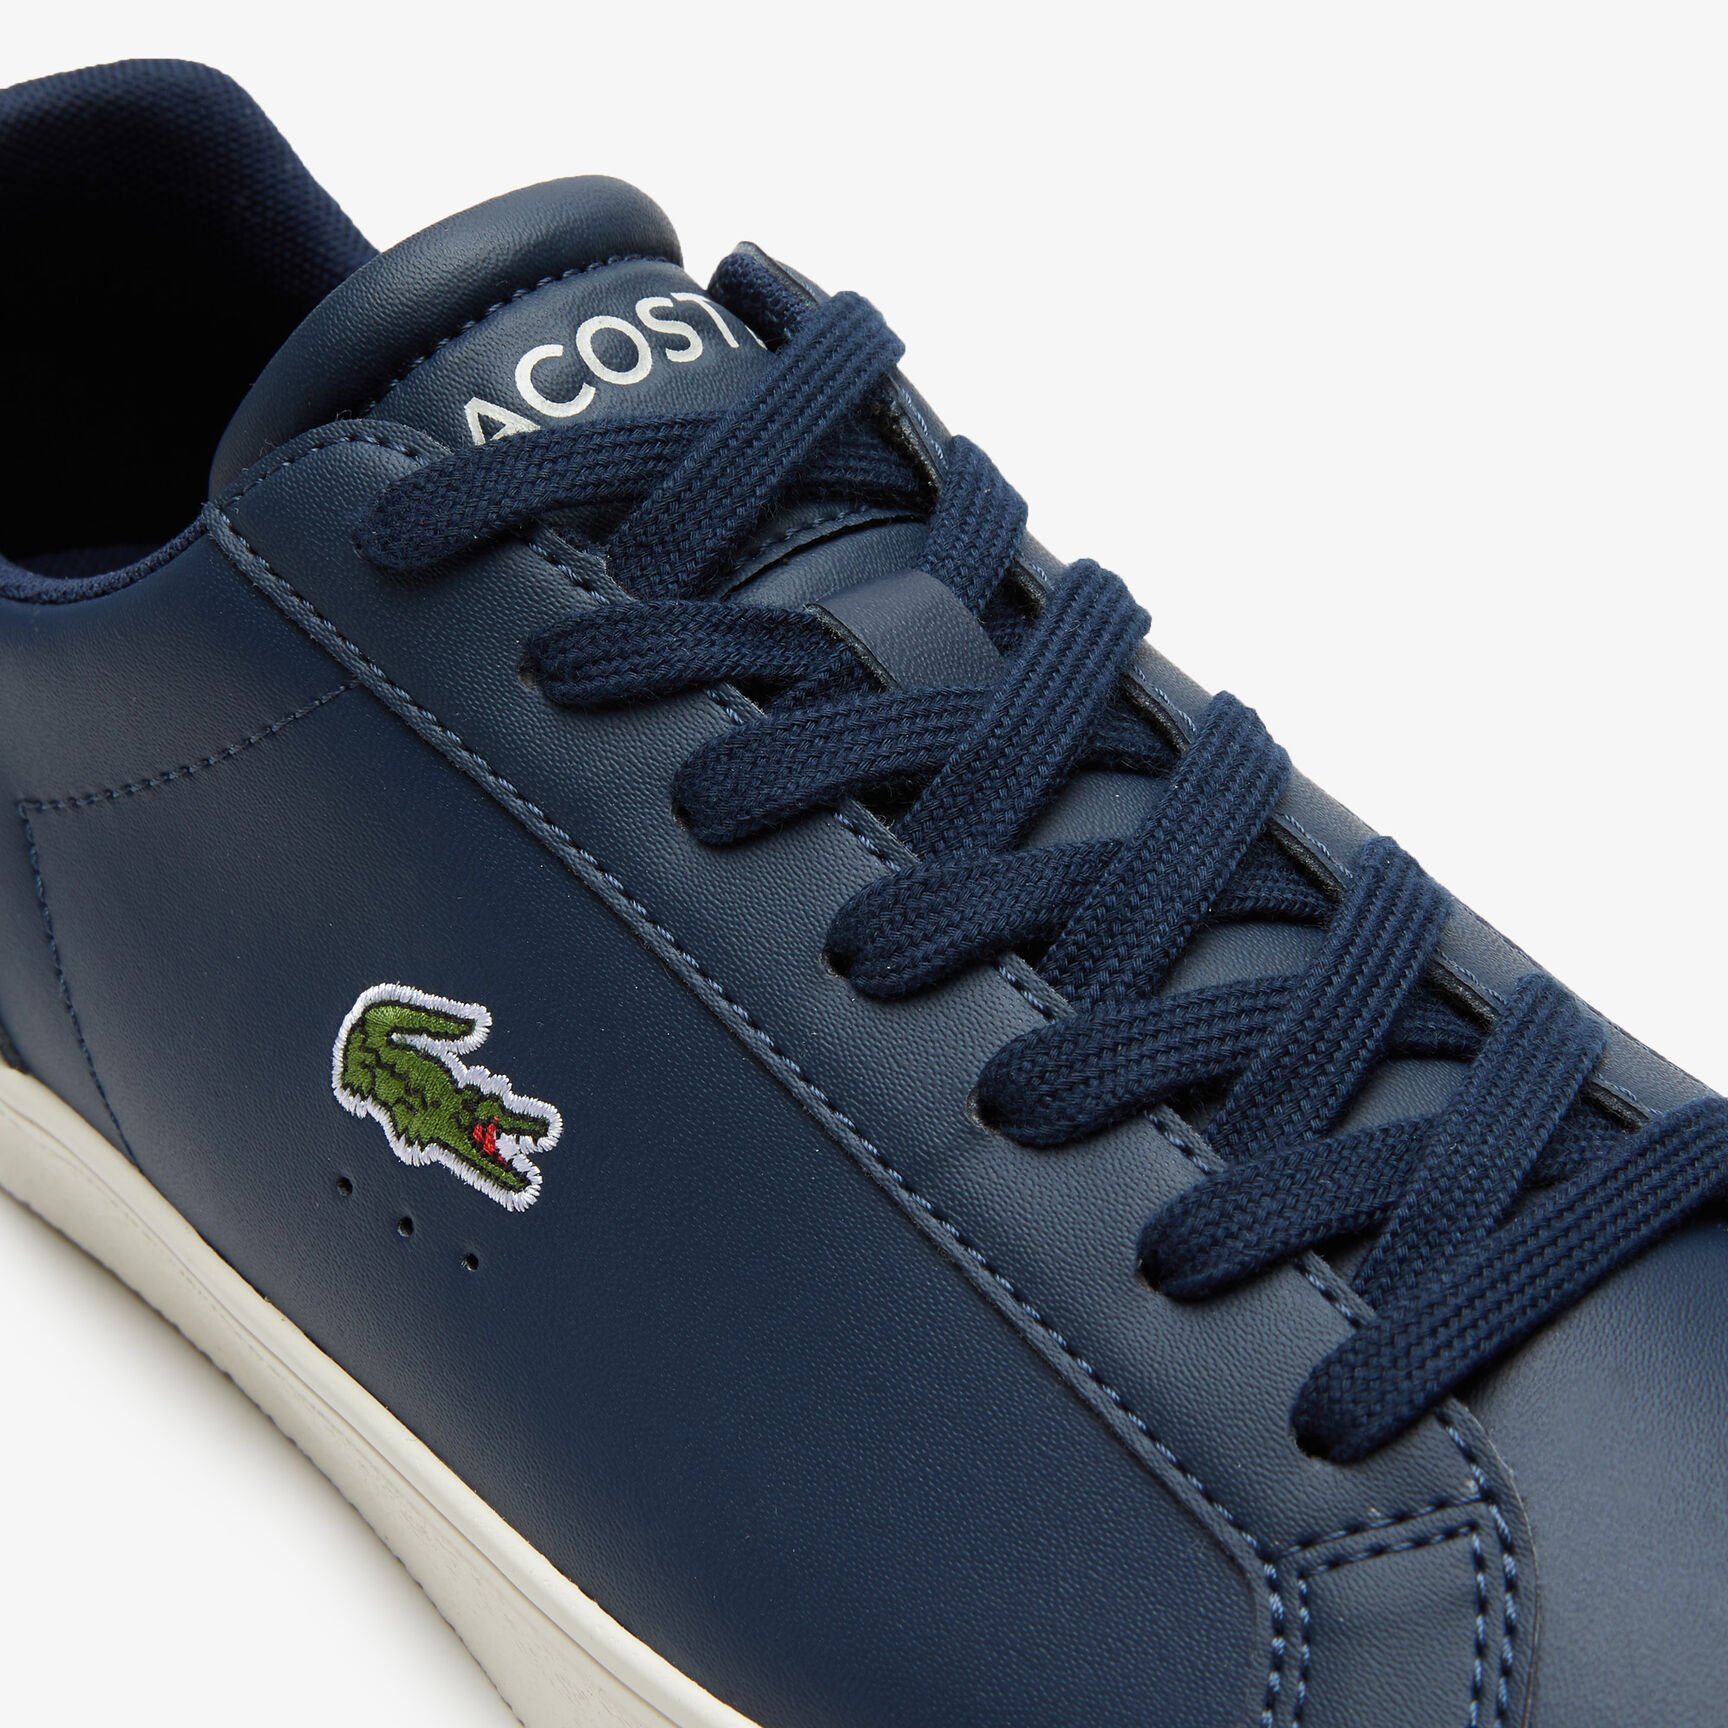 Buy Men's Lacoste Lerond Pro Leather Sneakers | Lacoste EG